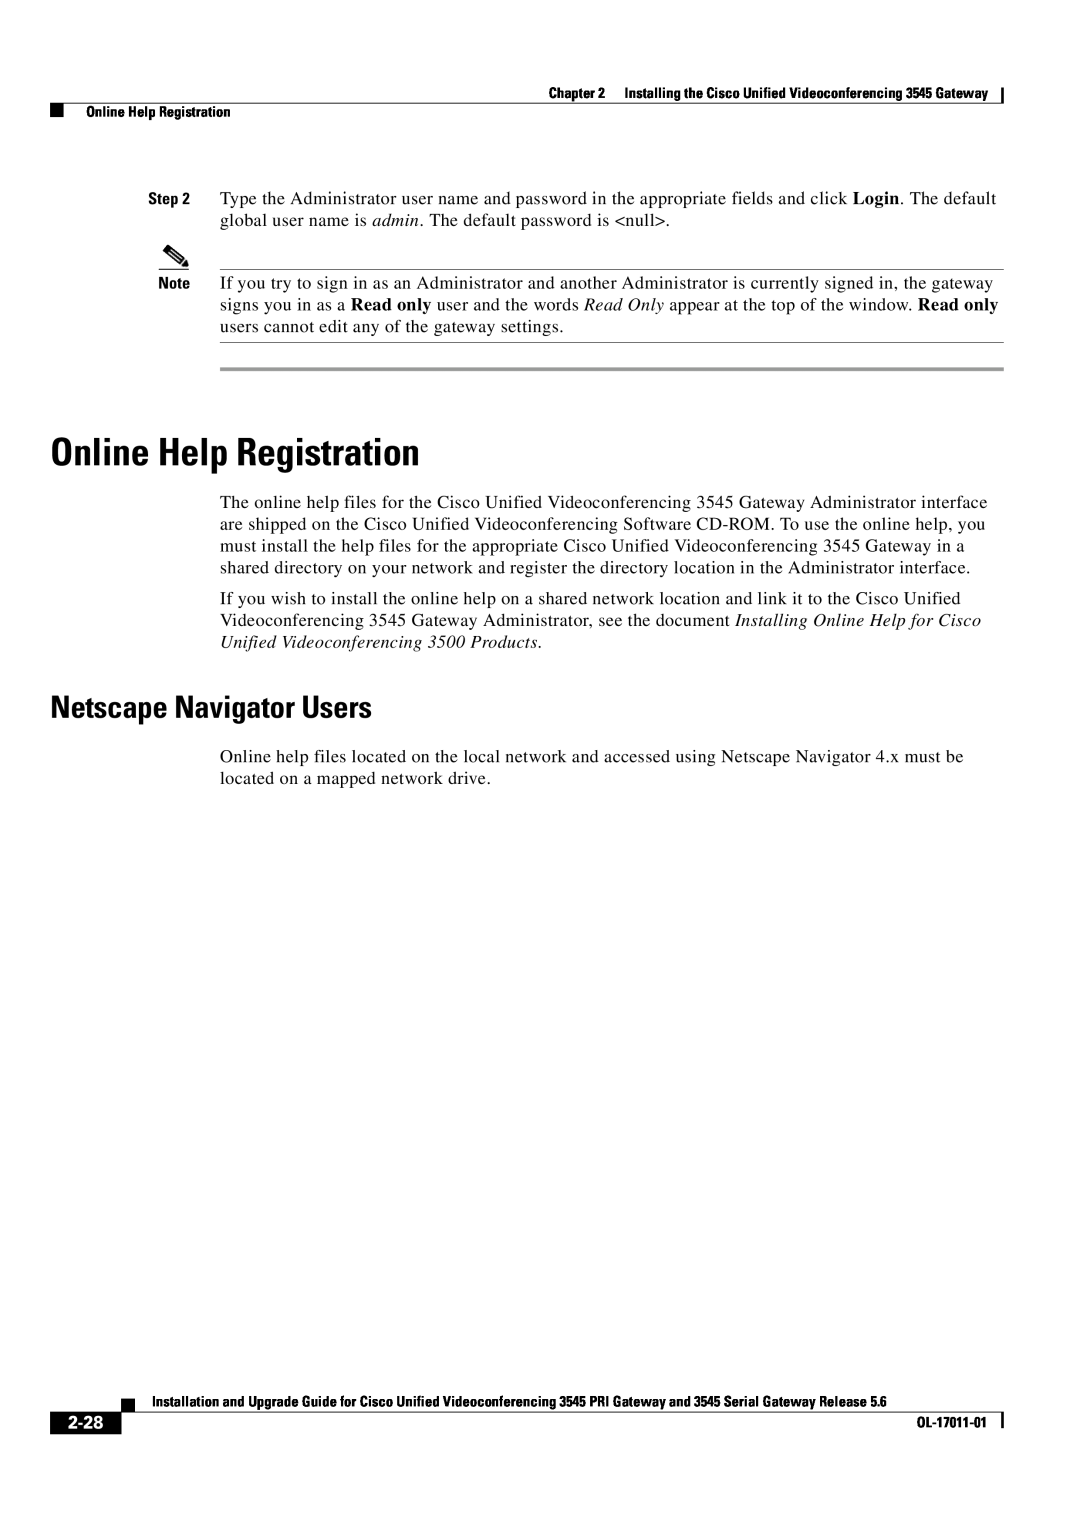 Cisco Systems 3545 PRI, 3545 Serial manual Online Help Registration, Netscape Navigator Users, 2-28 